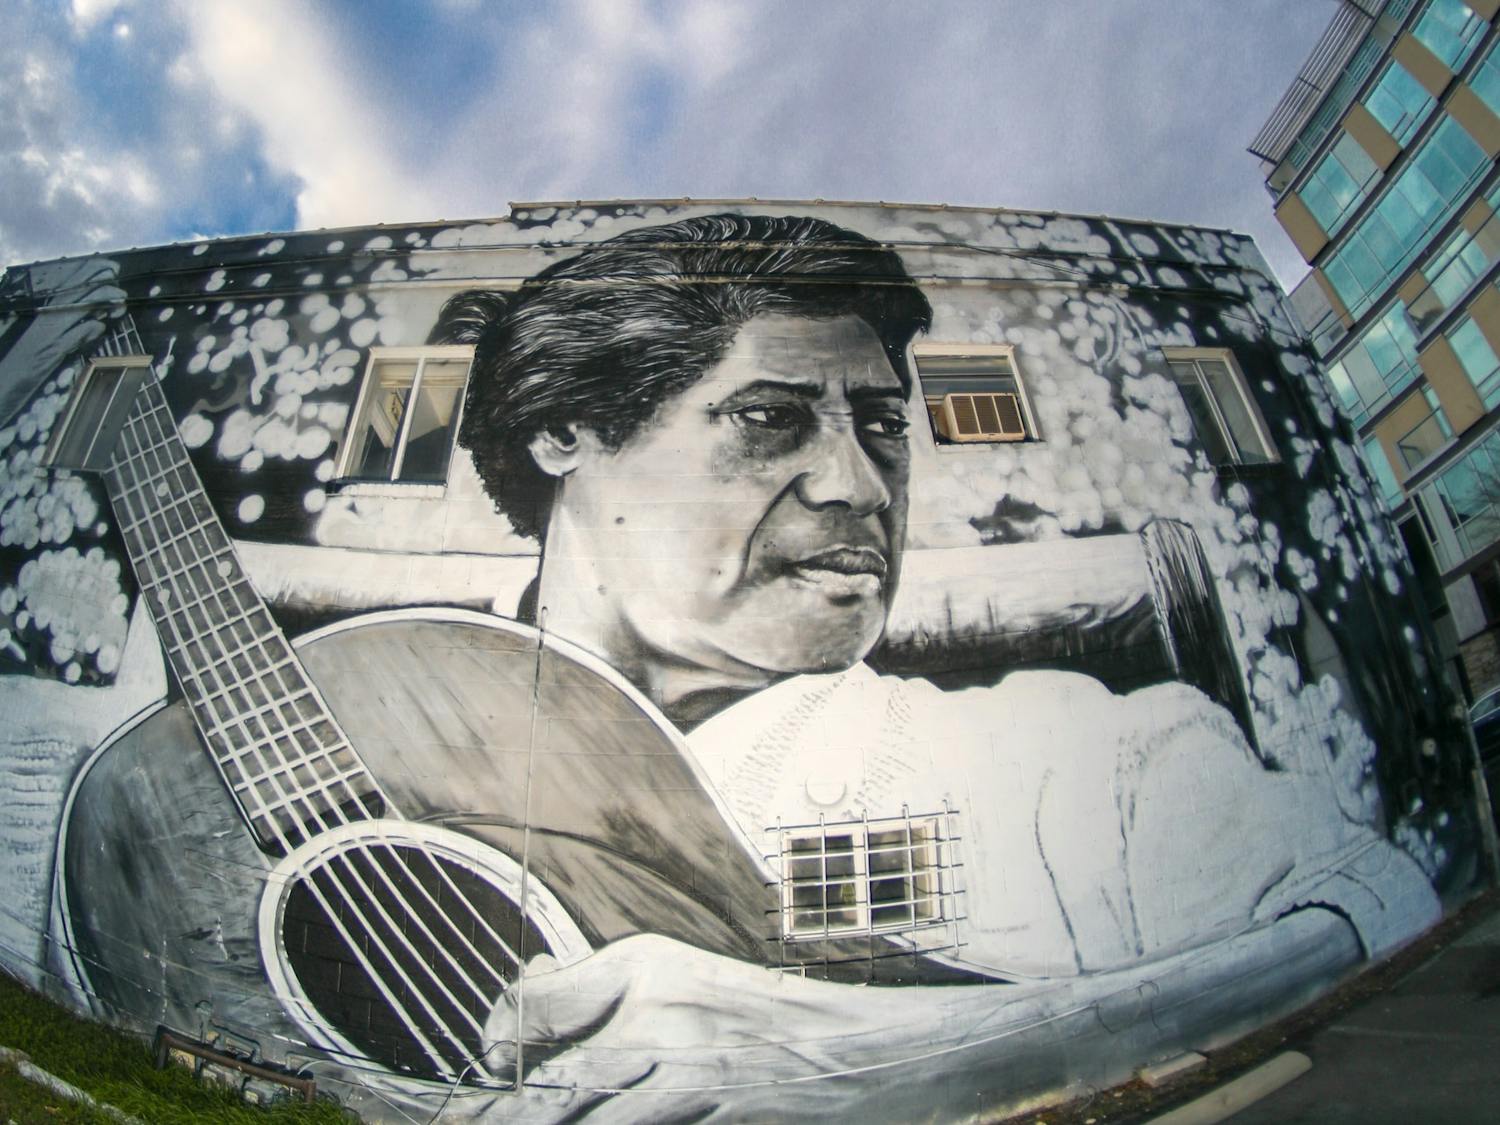 Local artist Scott Nurkin's mural of Elizabeth Cotton, legendary blues musician, is pictured on Sunday, Jan. 9, 2022.